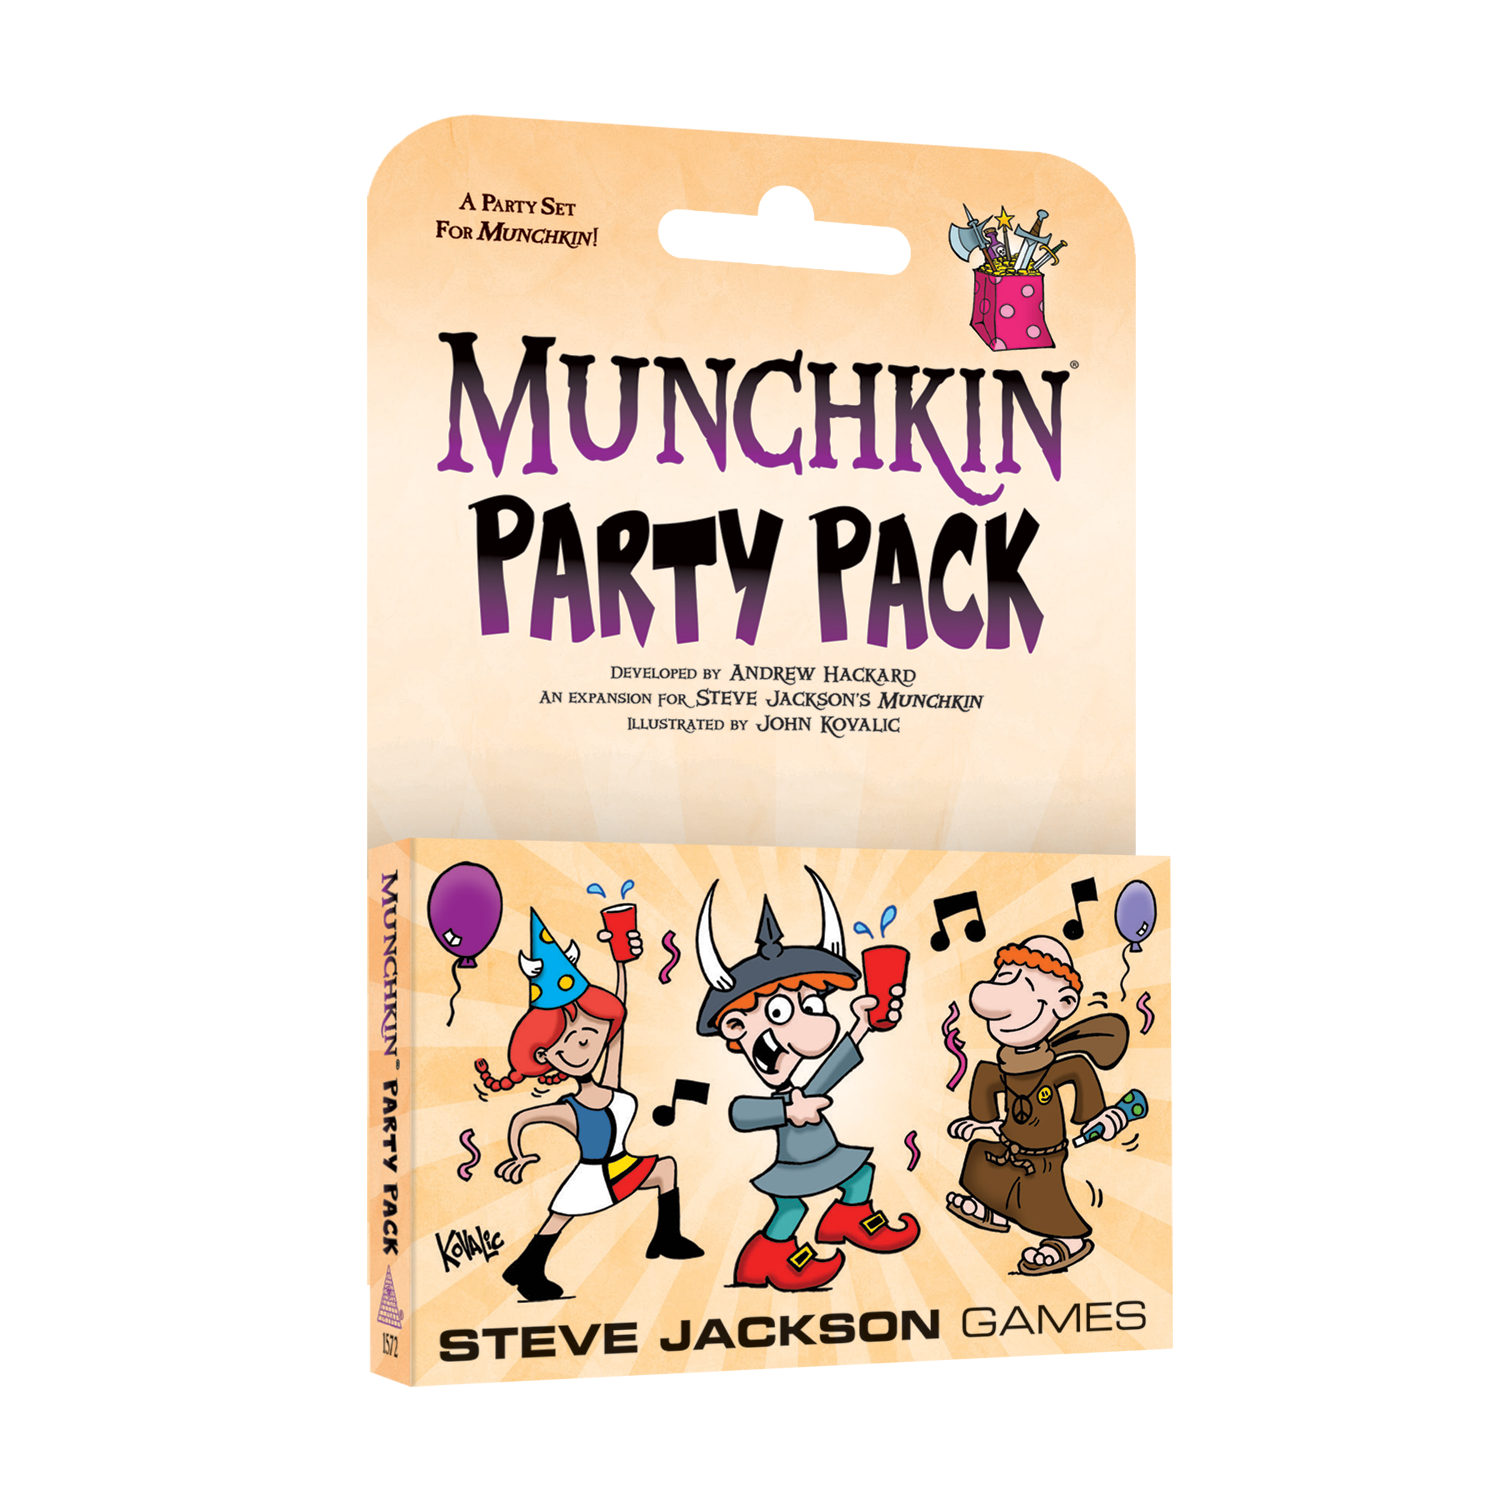 Munchkin Princess packs Factory Sealed Unopened